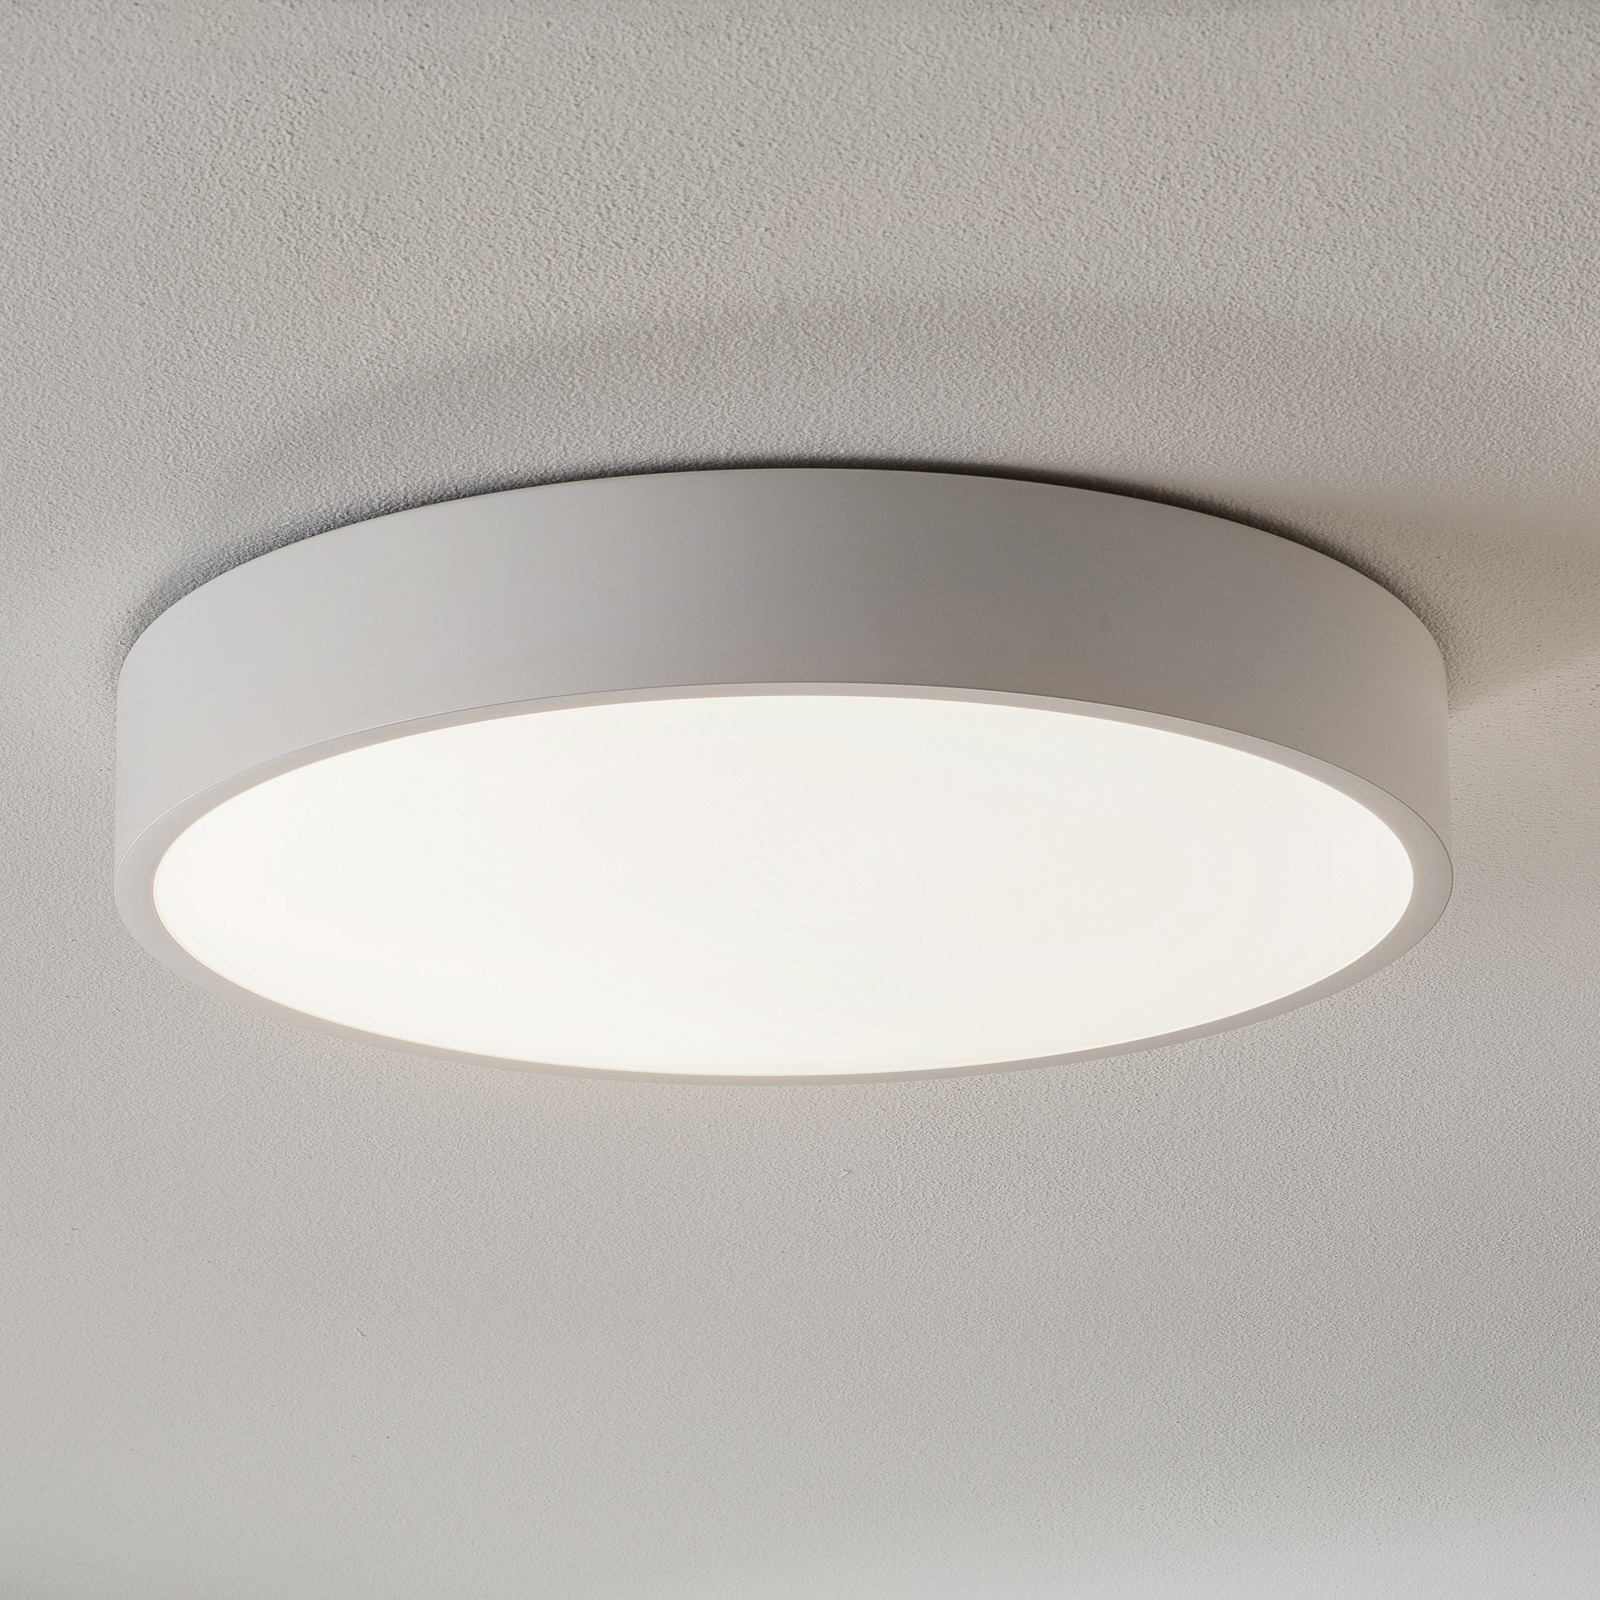 BEGA Planeta ceiling lamp DALI 3,000K white Ø 50cm